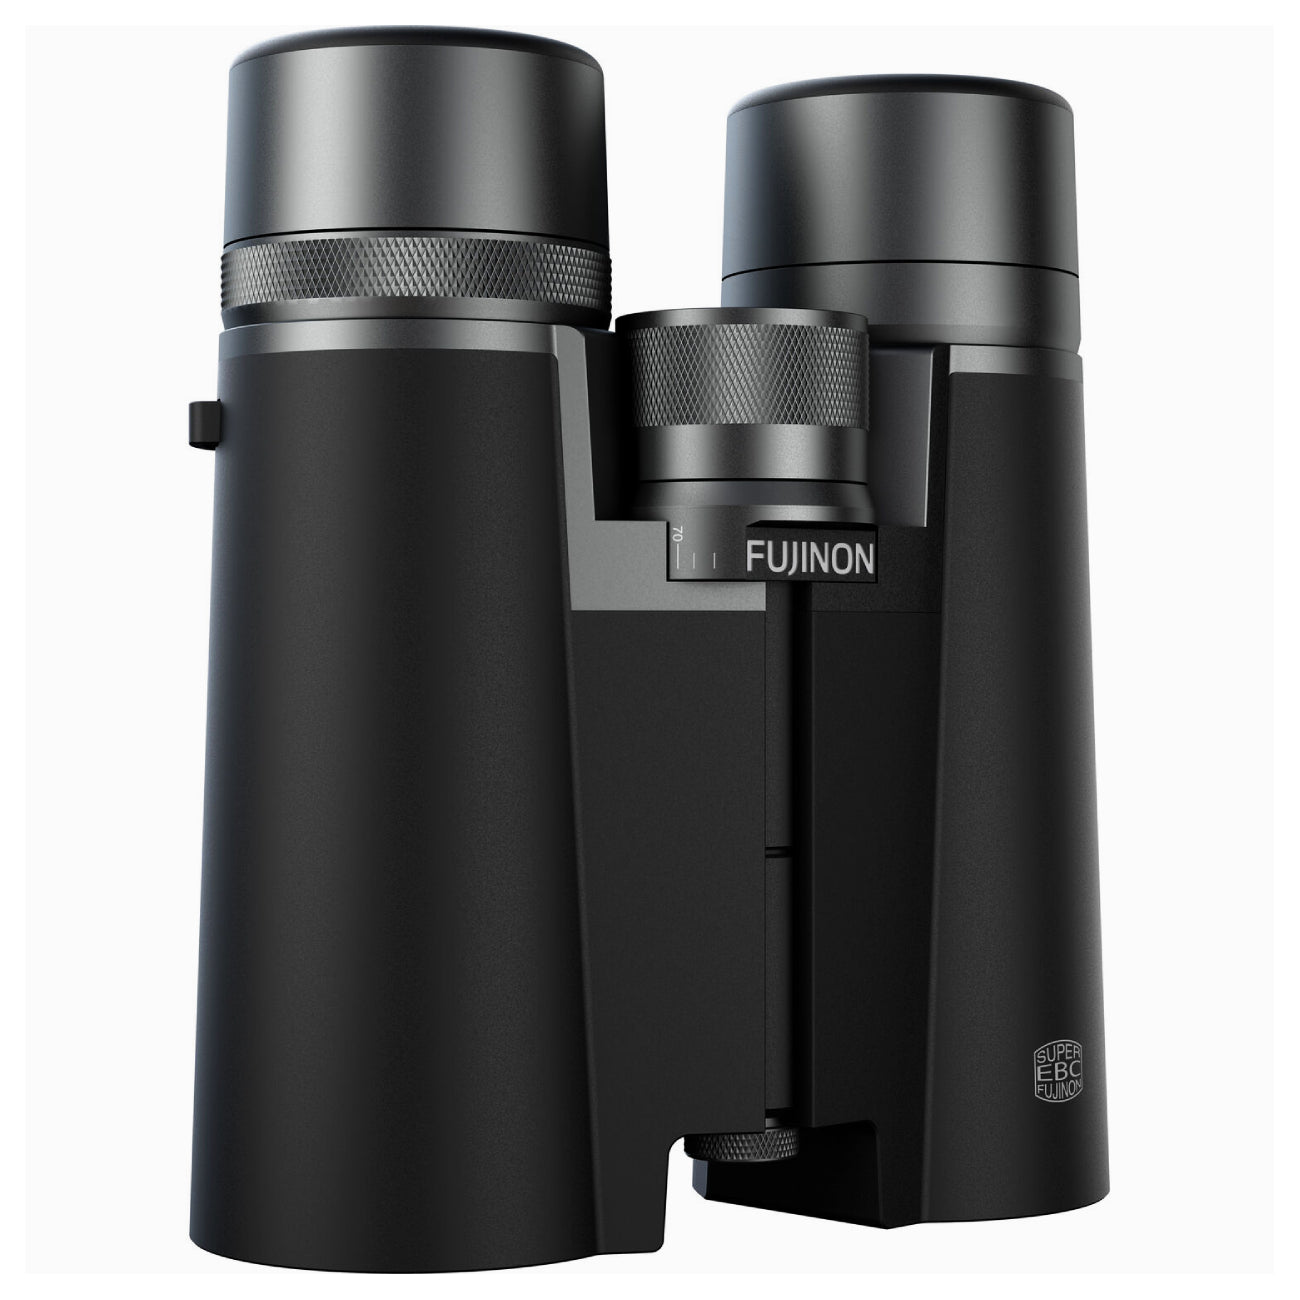 Fujifilm Fujinon Hyper Clarity HC 10x42 - Side View / buy binoculars online, best binoculars for distance